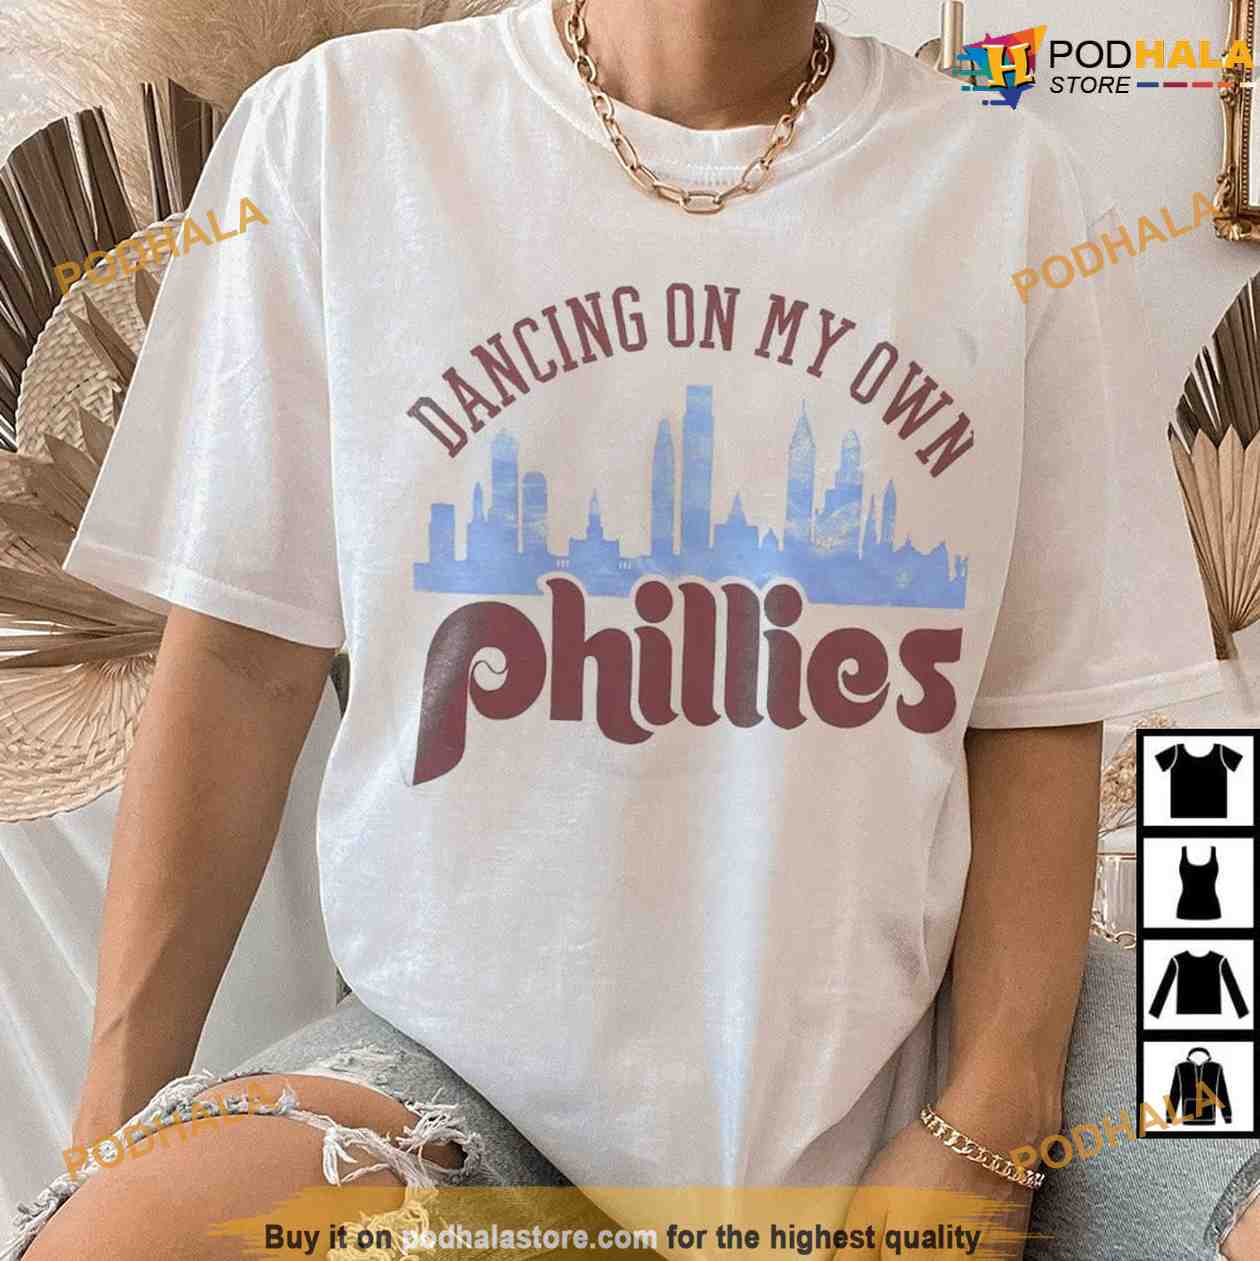 Phillies Dancing On My Own Philadelphia Phillies shirt, hoodie, sweater,  long sleeve and tank top